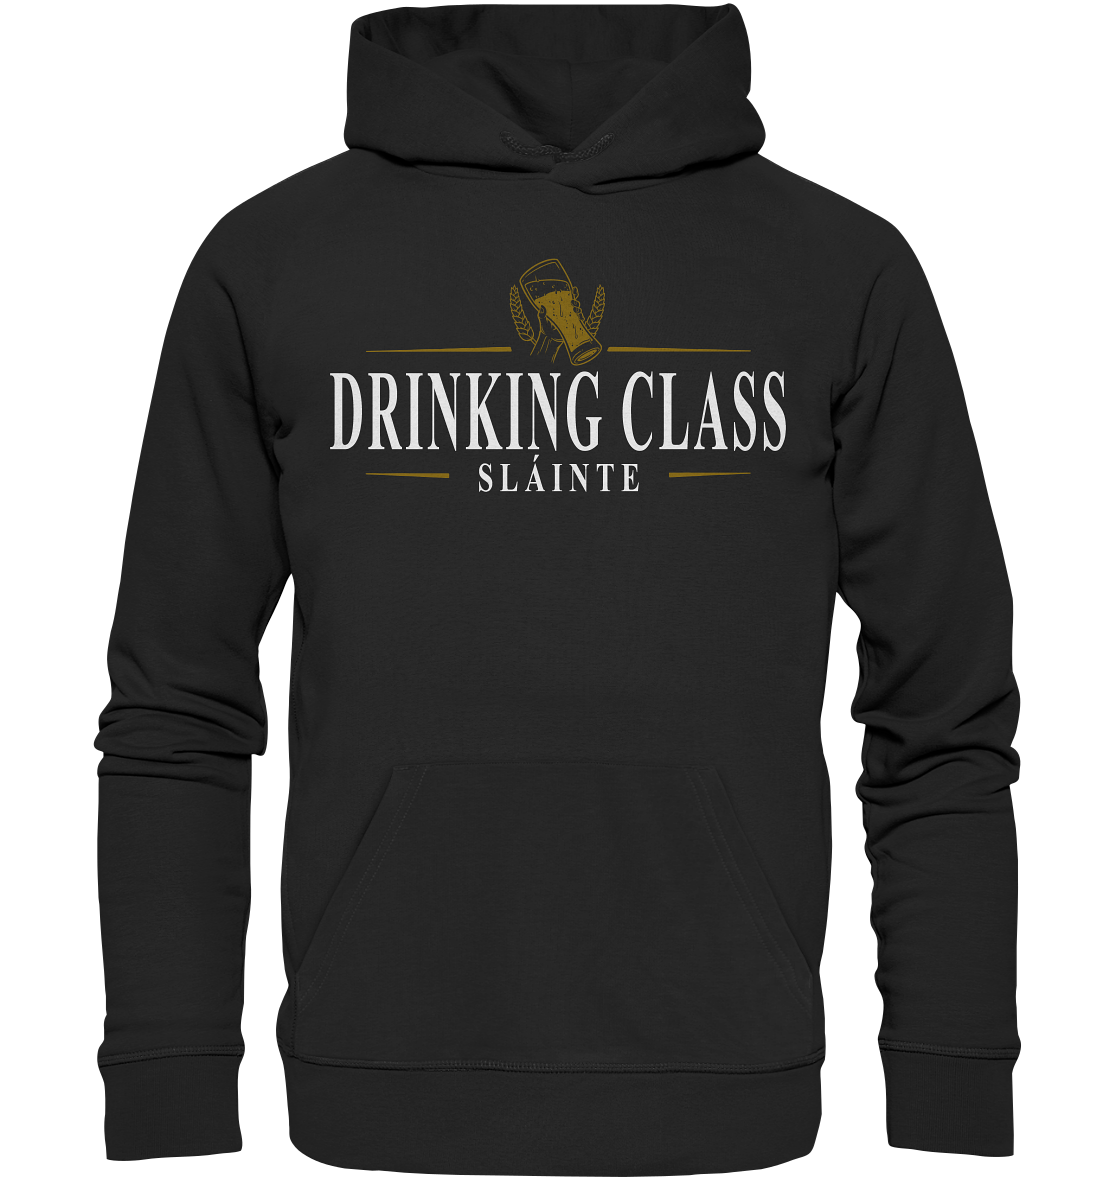 Drinking Class "Sláinte" - Organic Hoodie